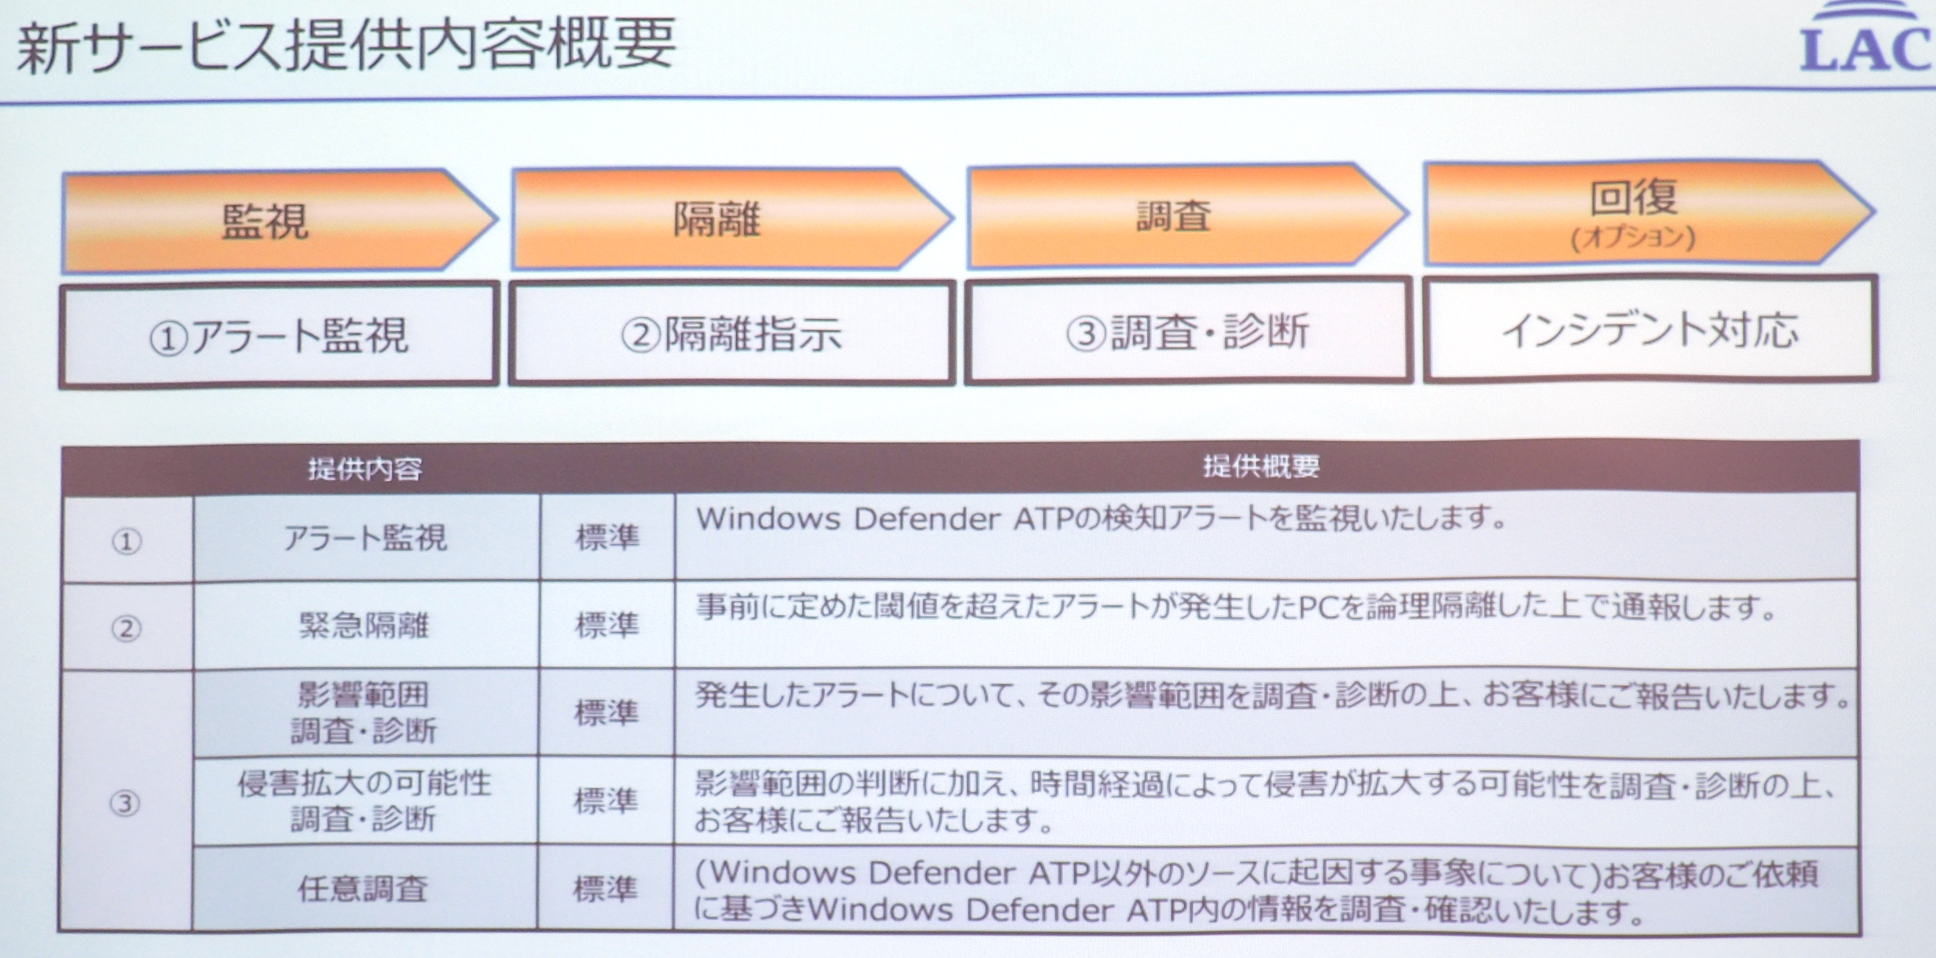 }l[WhEDRT[rX for Windows Defender ATPŒ񋟂T[rXe